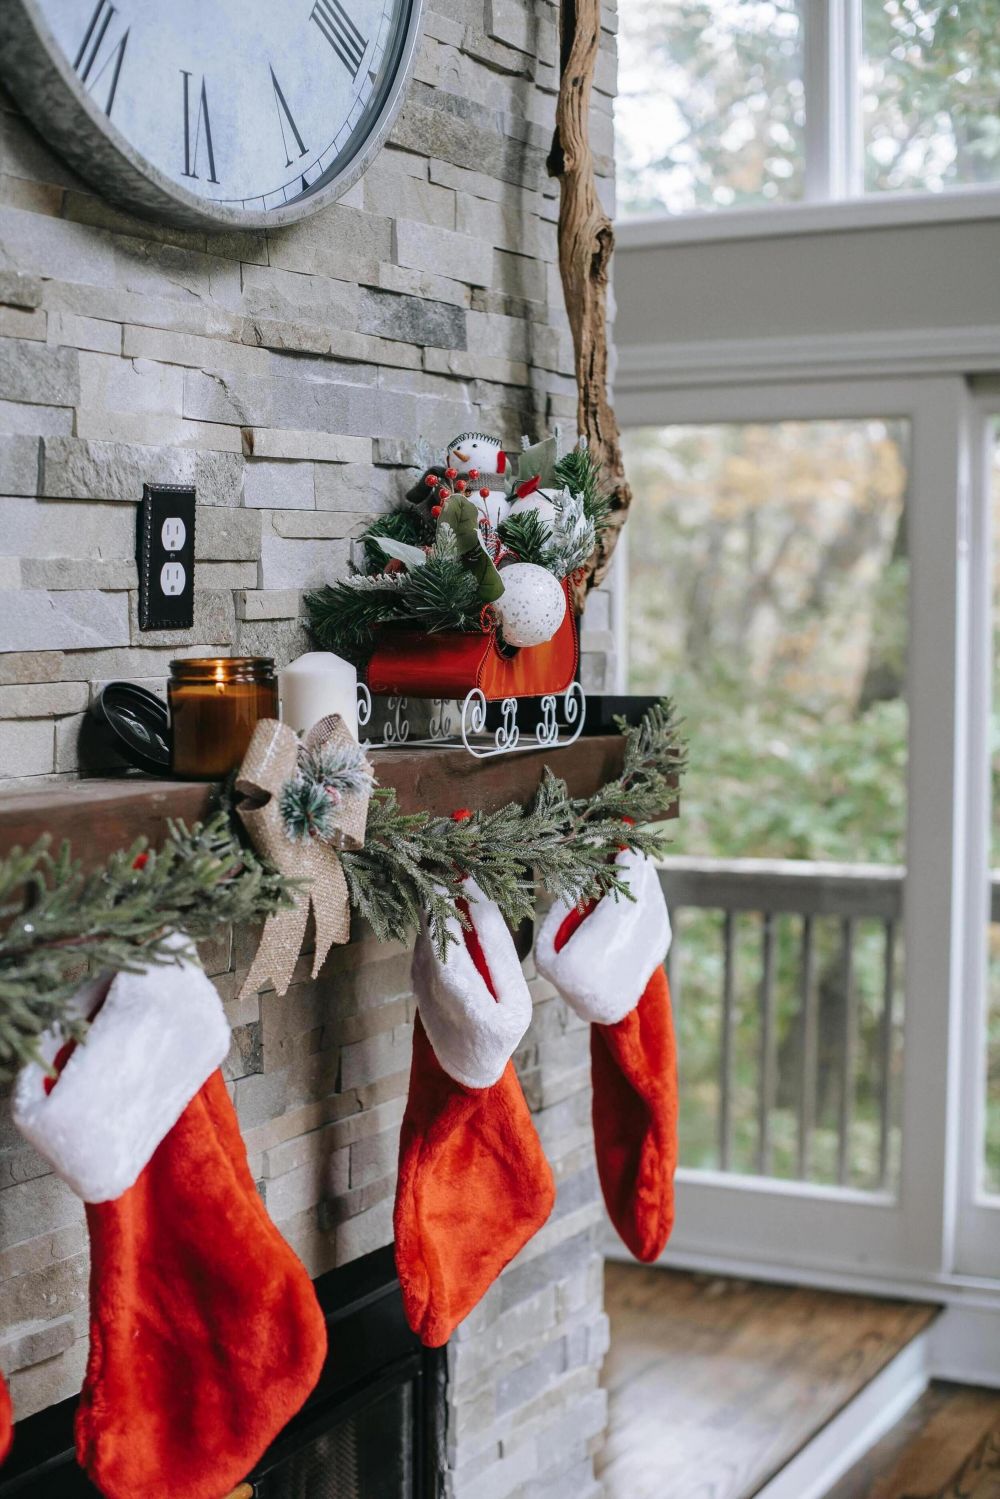 7 Rekomendasi Hiasan Natal yang Dapat Mempercantik Rumah Kamu, Sweet!